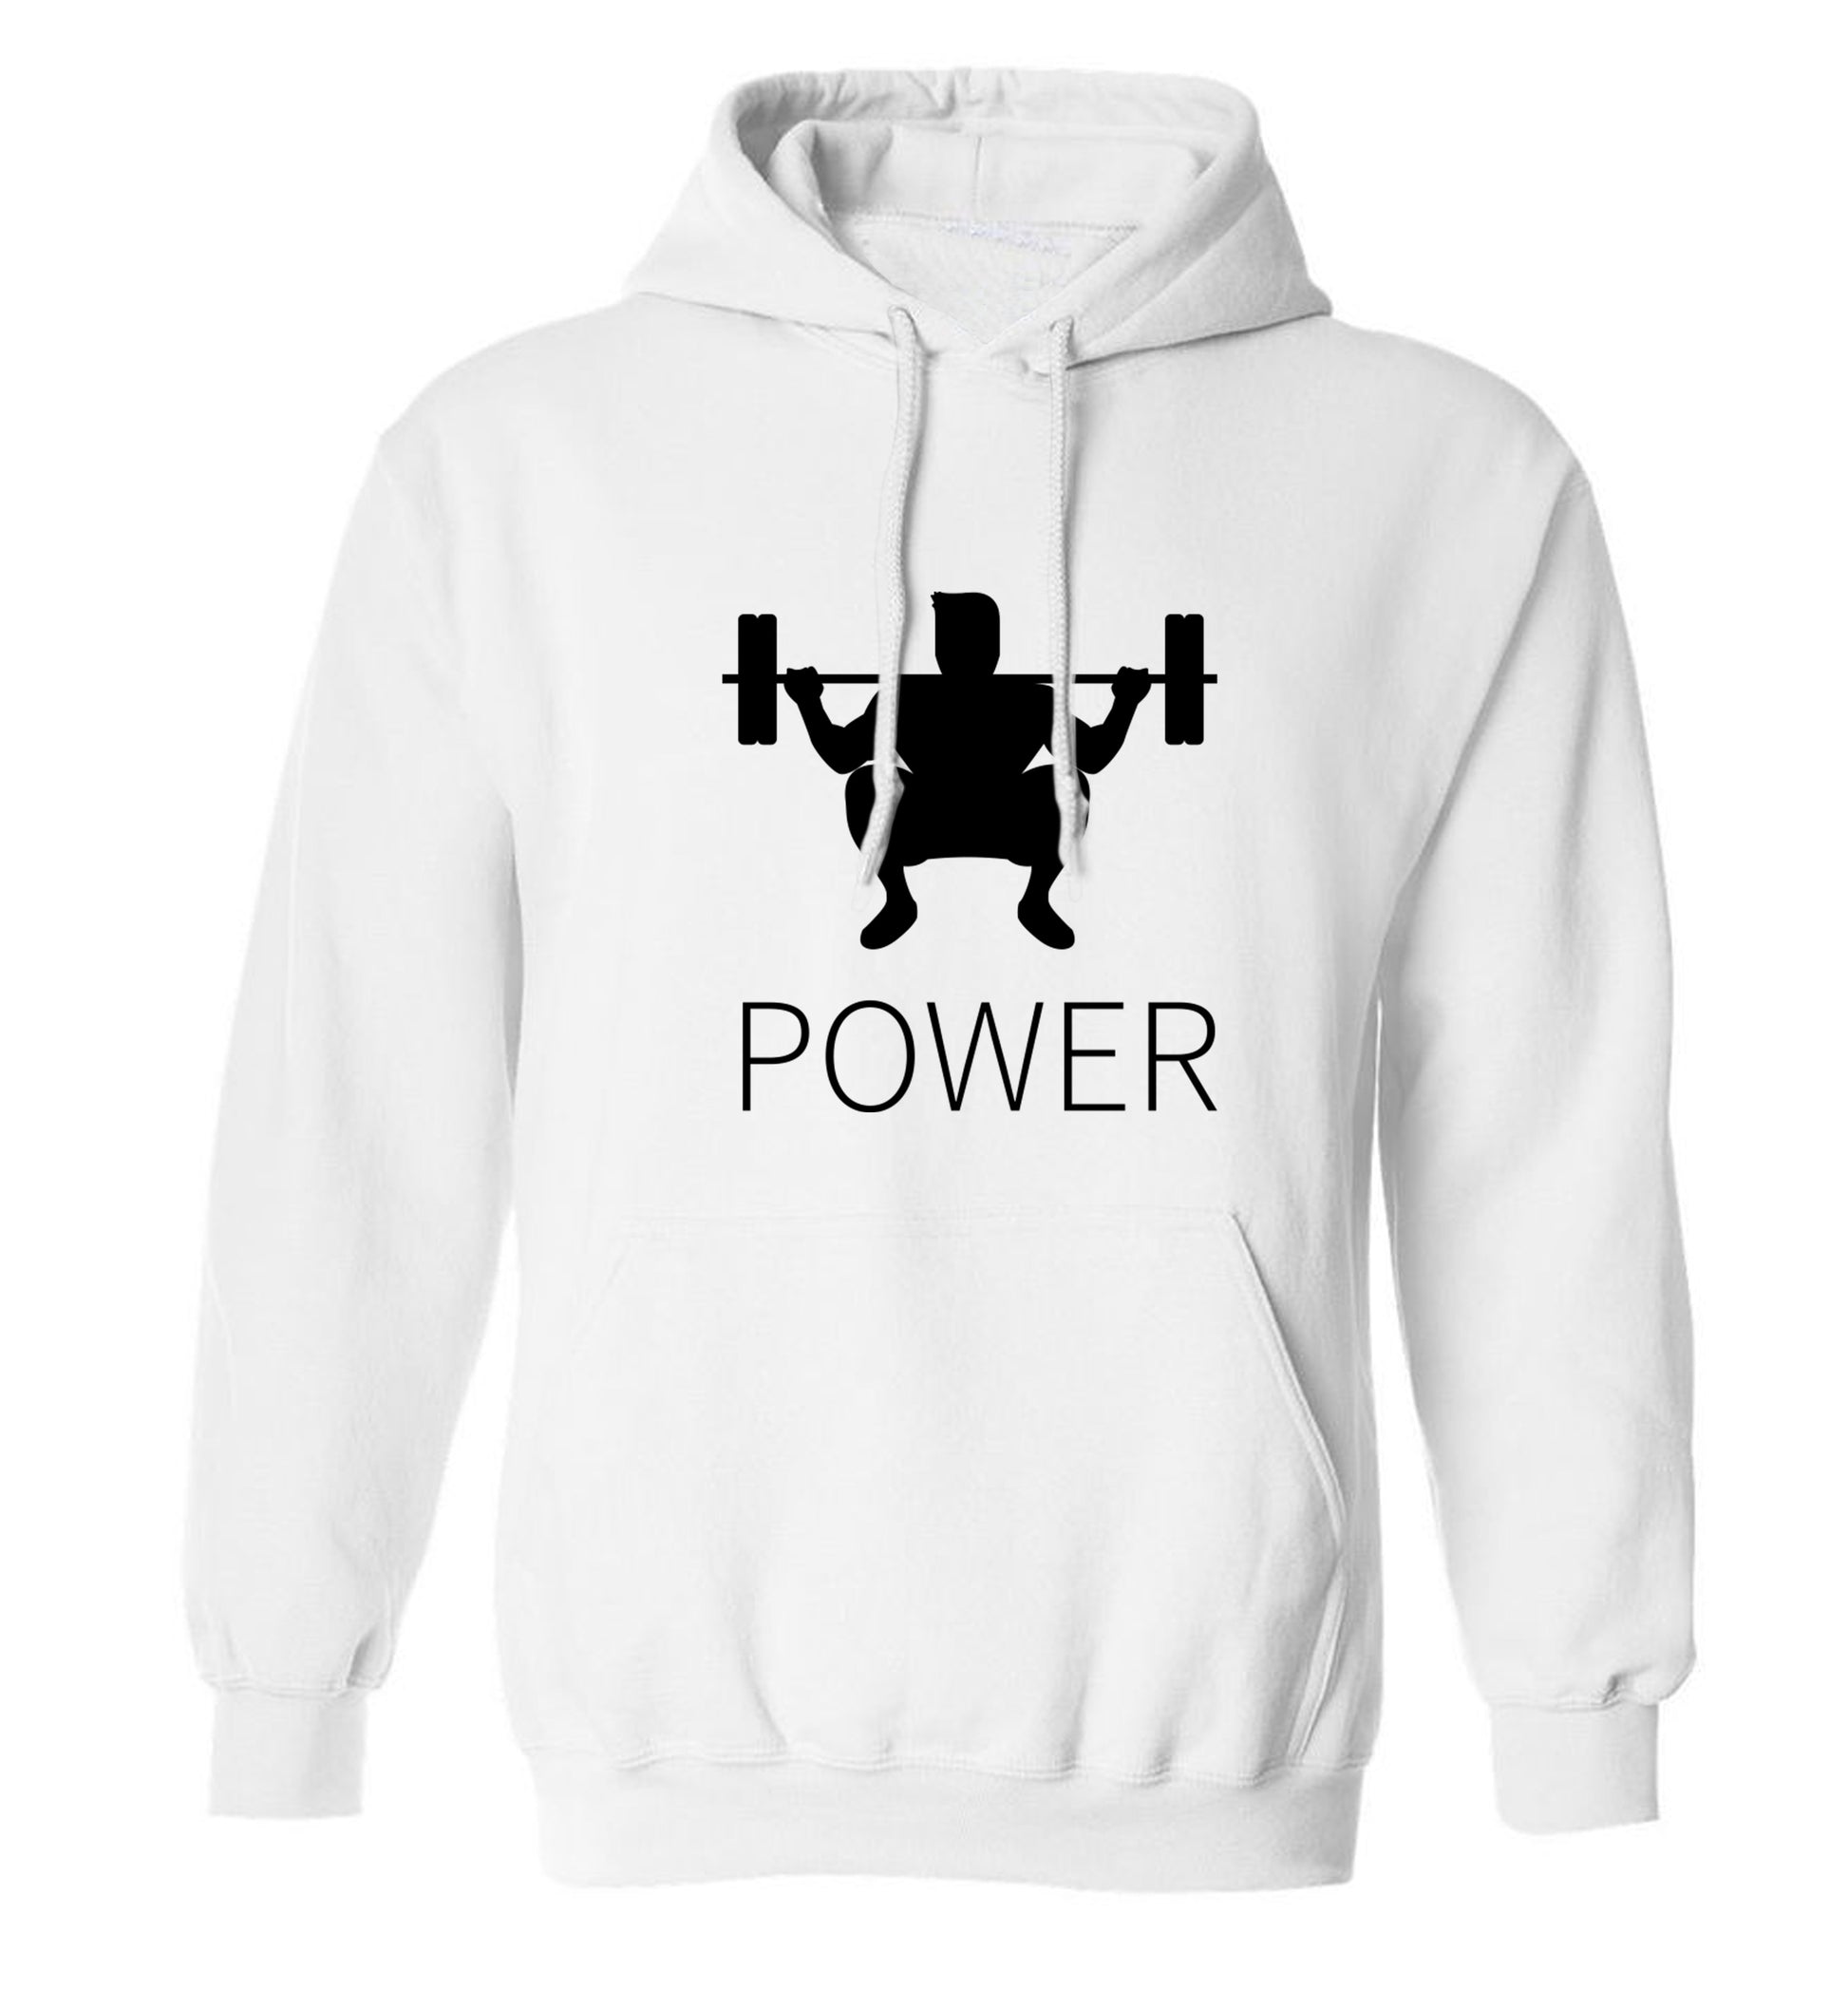 Lift power adults unisex white hoodie 2XL